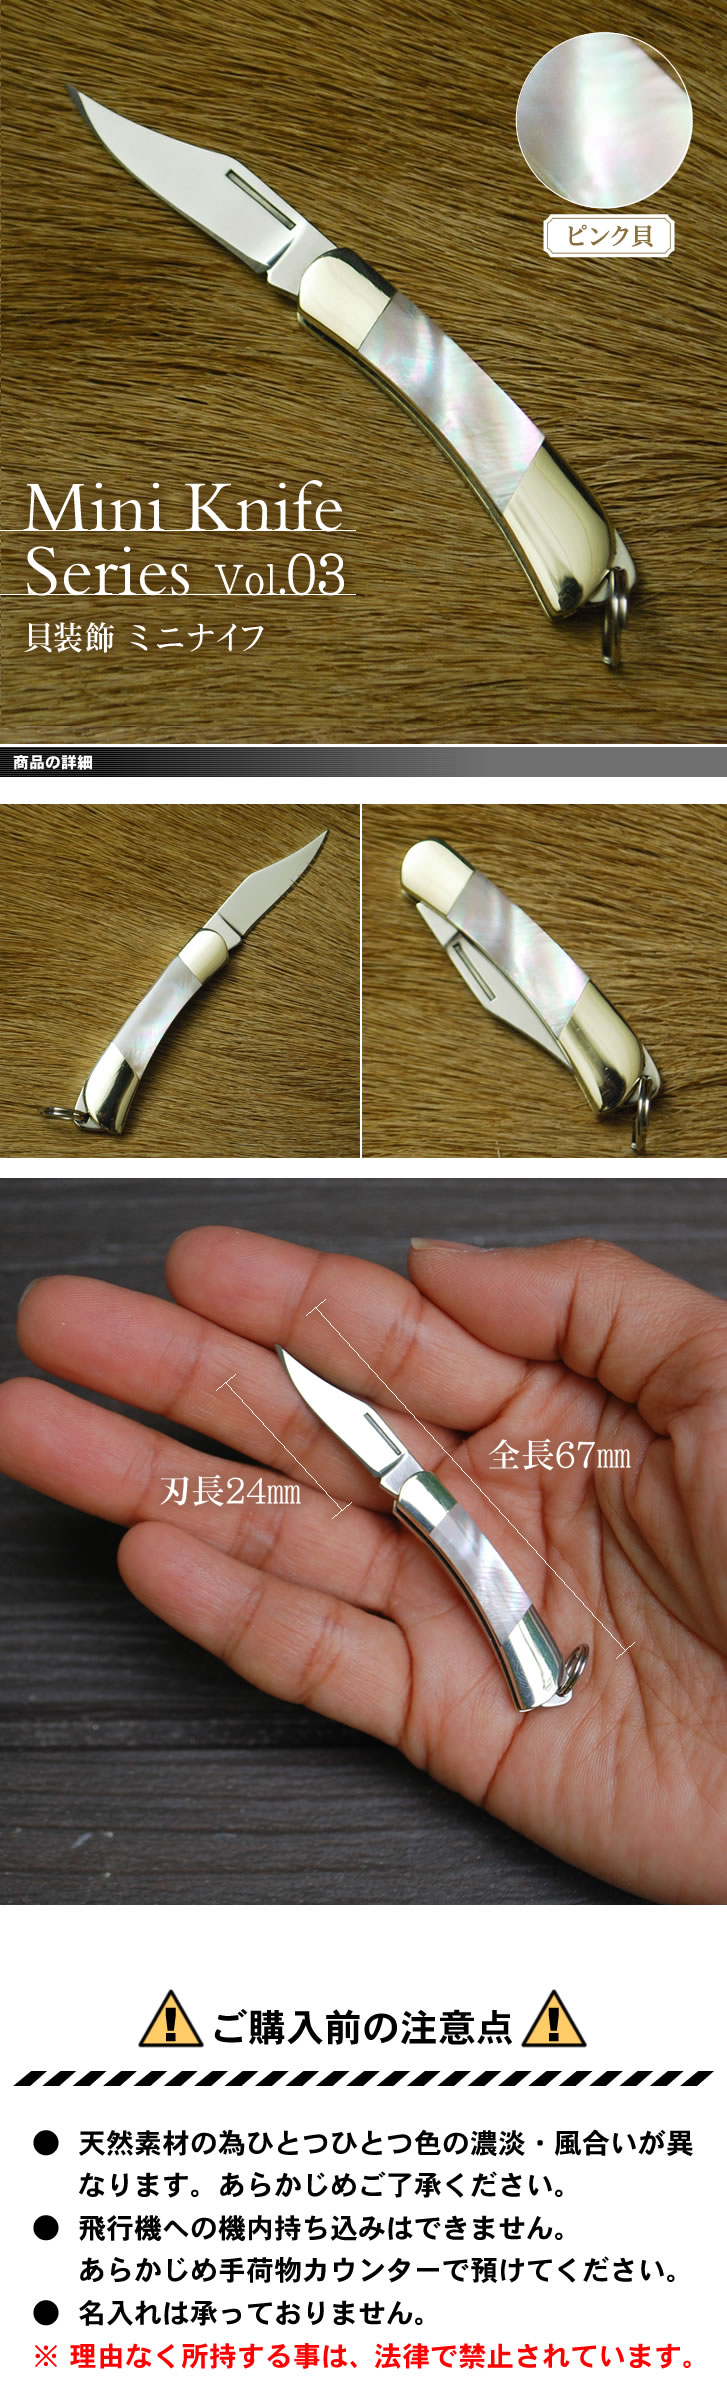 Mini Knife Series Vol.03 貝装飾ミニナイフシリーズ